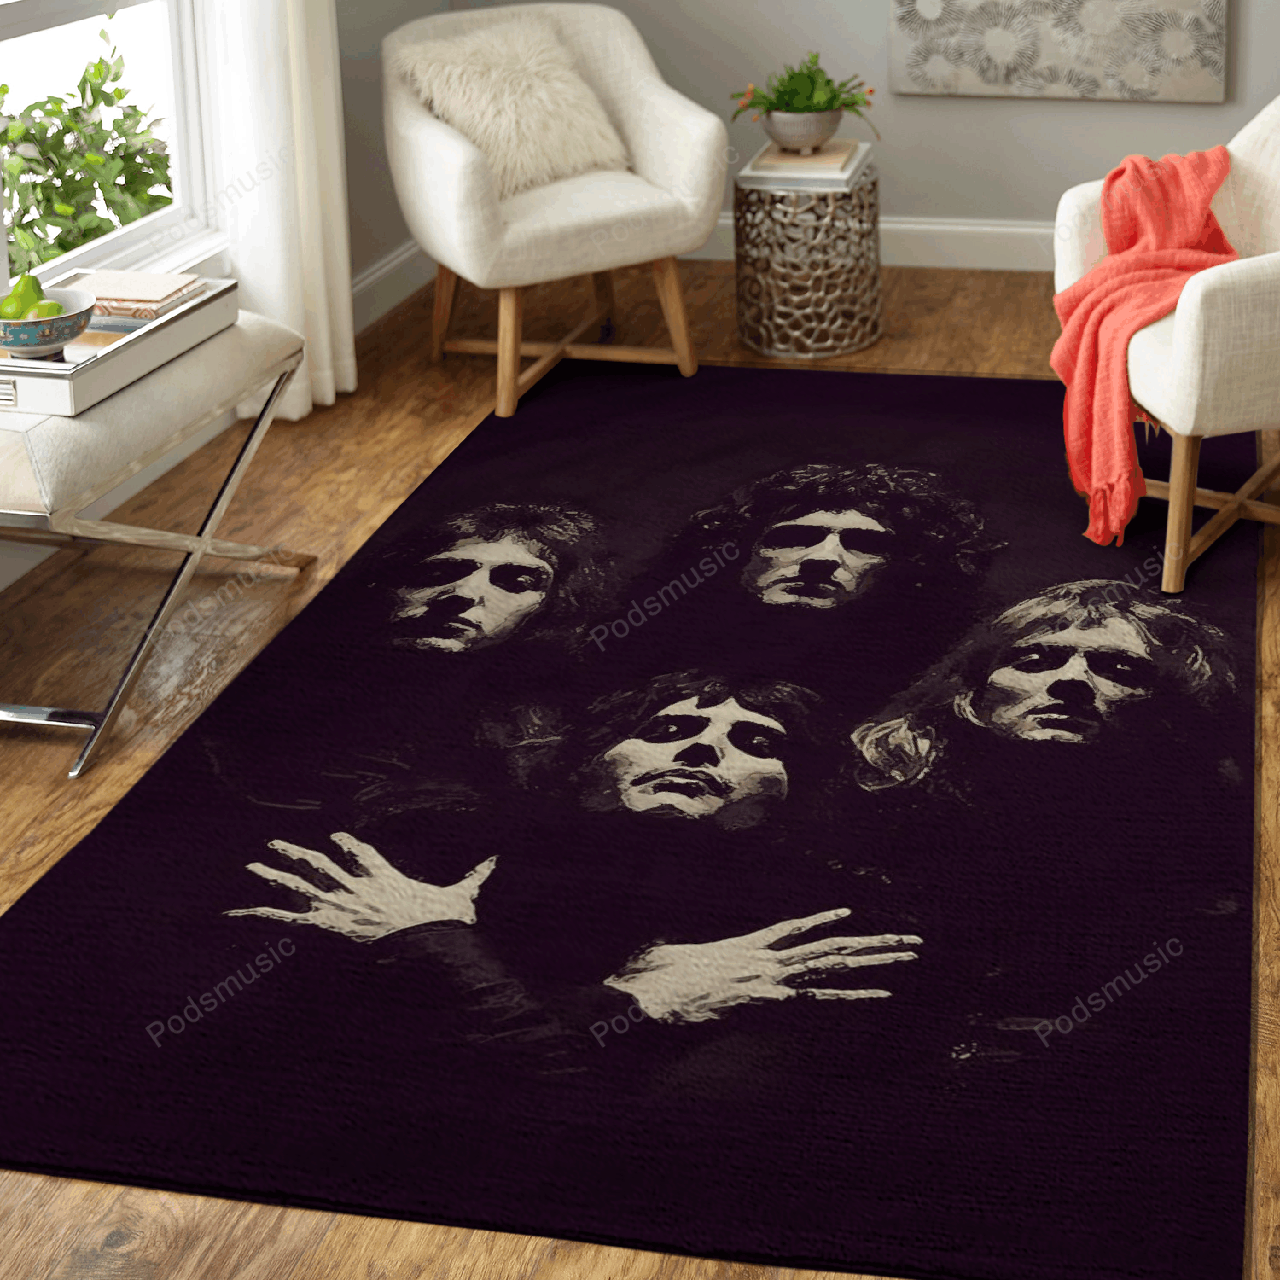 Freddie Mercury 1 – Music Art For Fans Area Rug Carpet